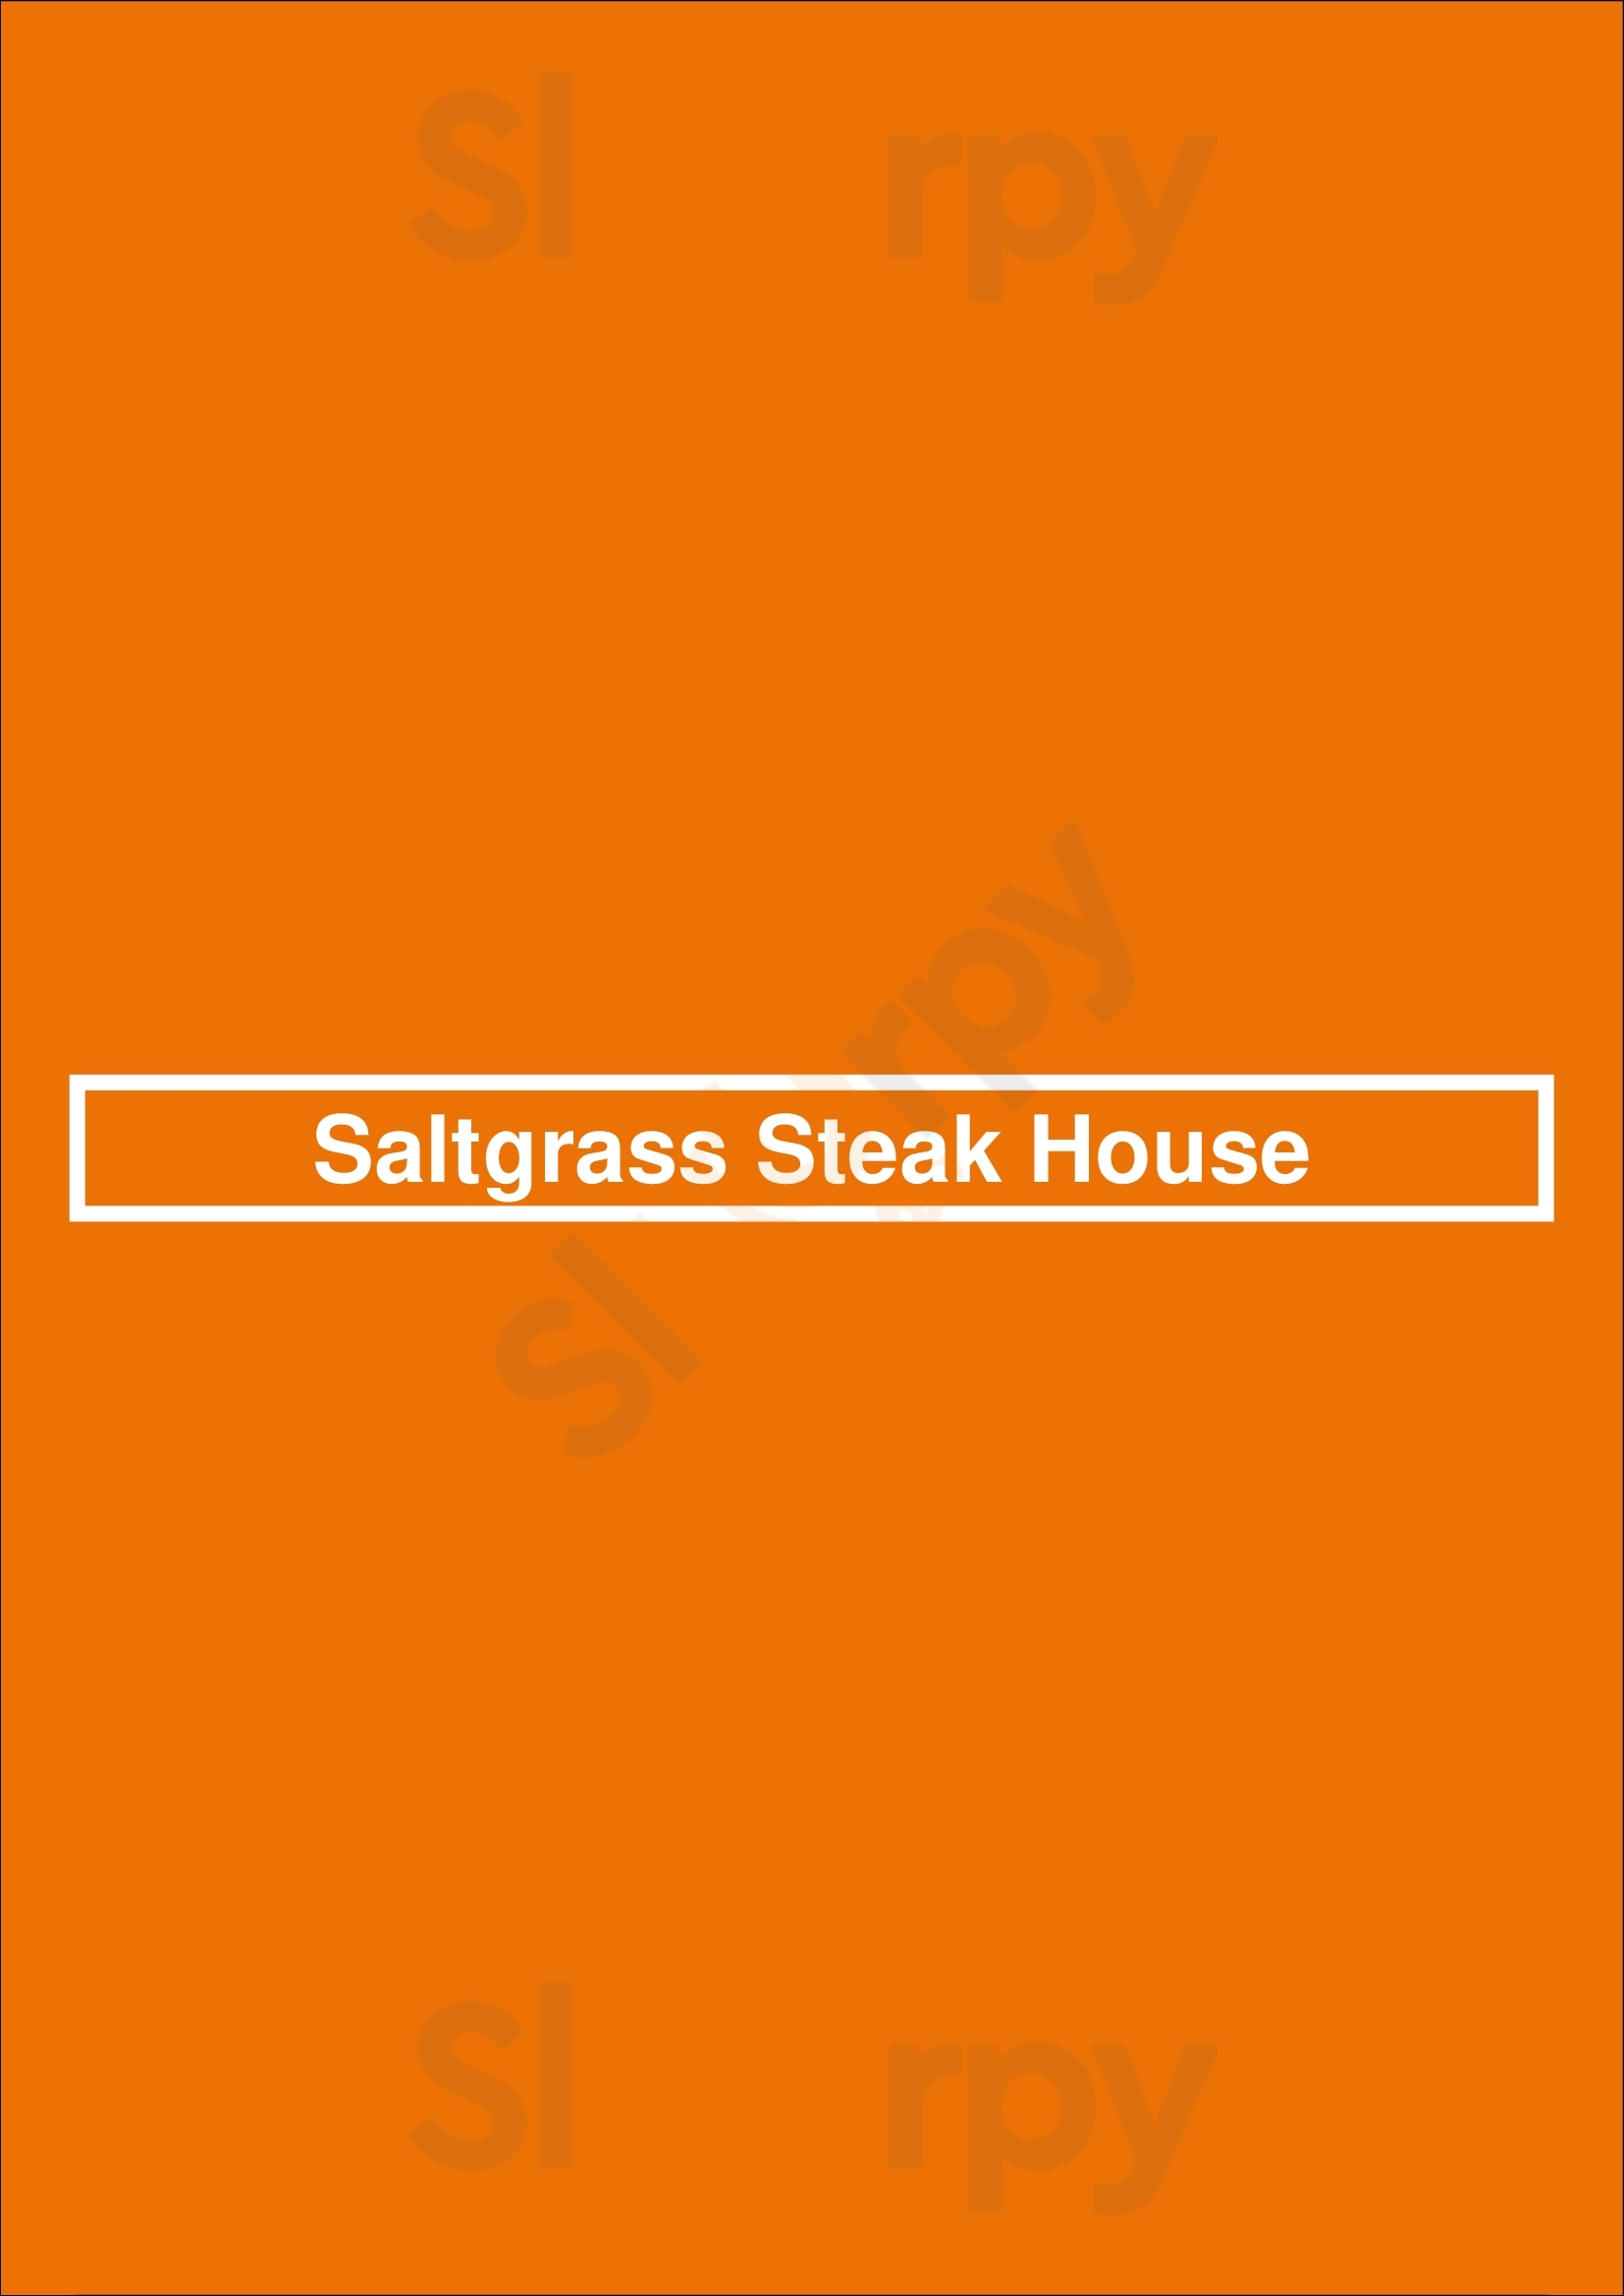 Saltgrass Steak House Houston Menu - 1